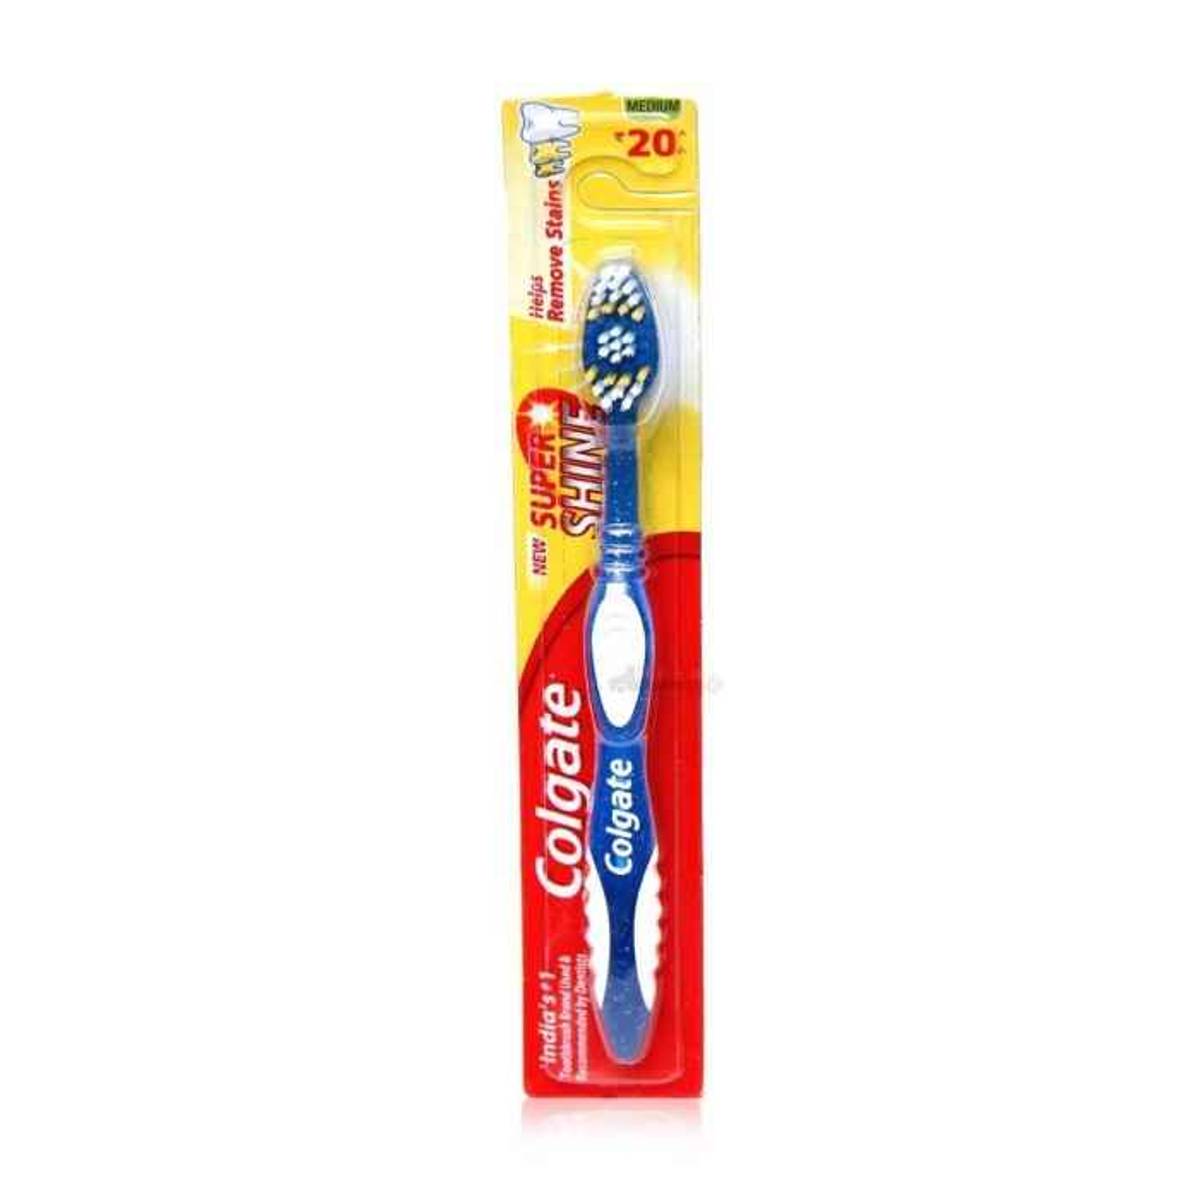 Colgate Super Shine Medium Toothbrush